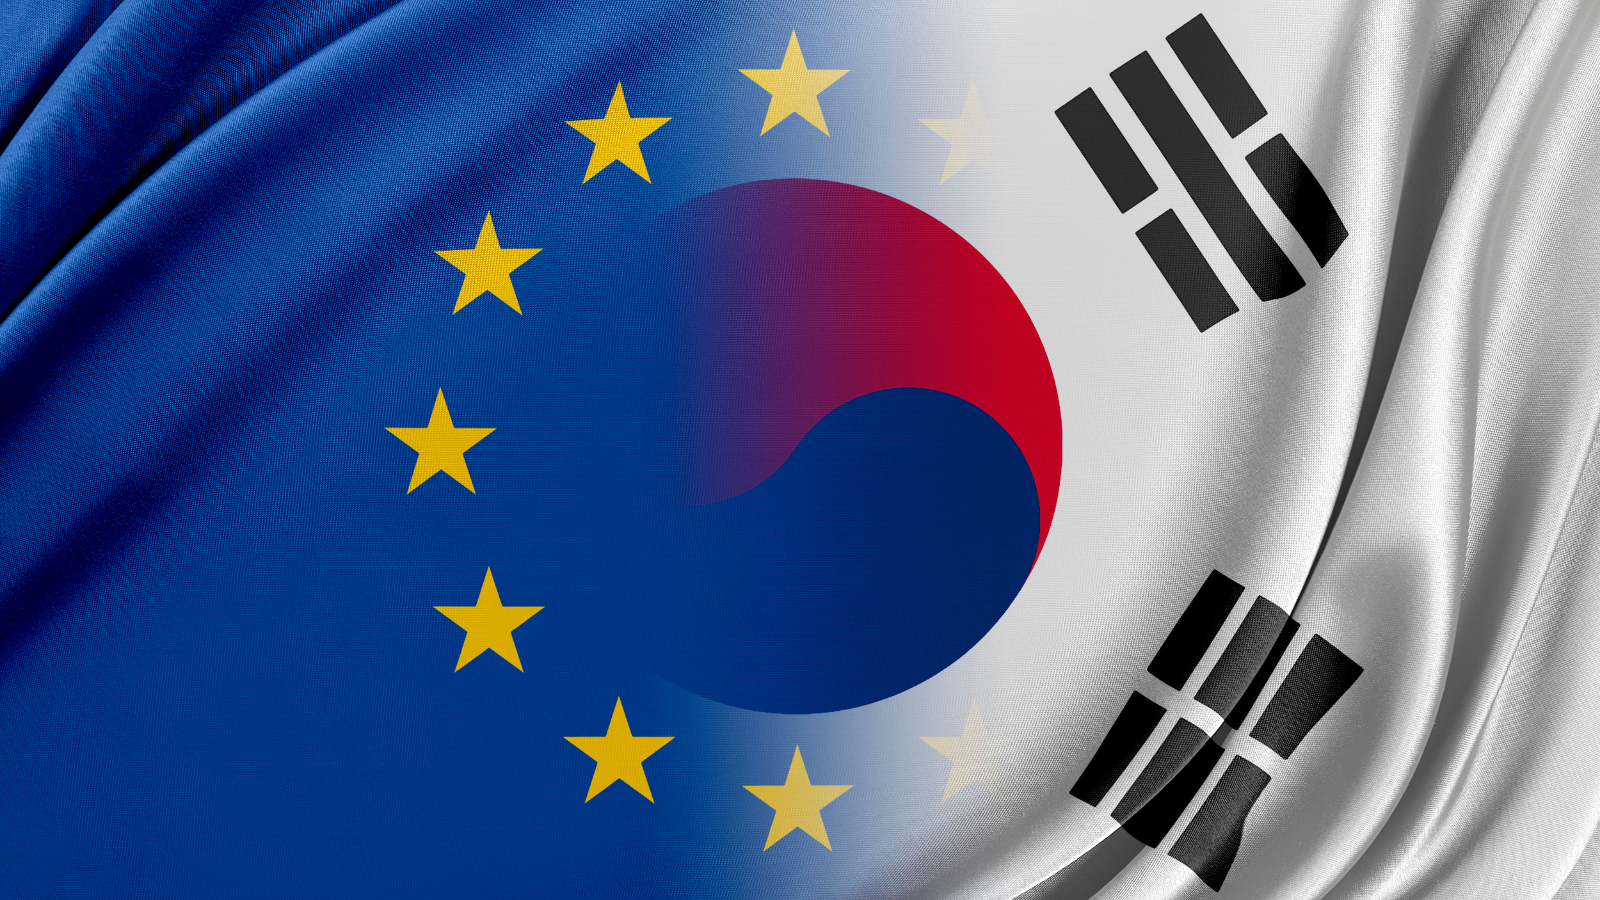 EU and Republic of Korea flags  © Getty images via Canva pro